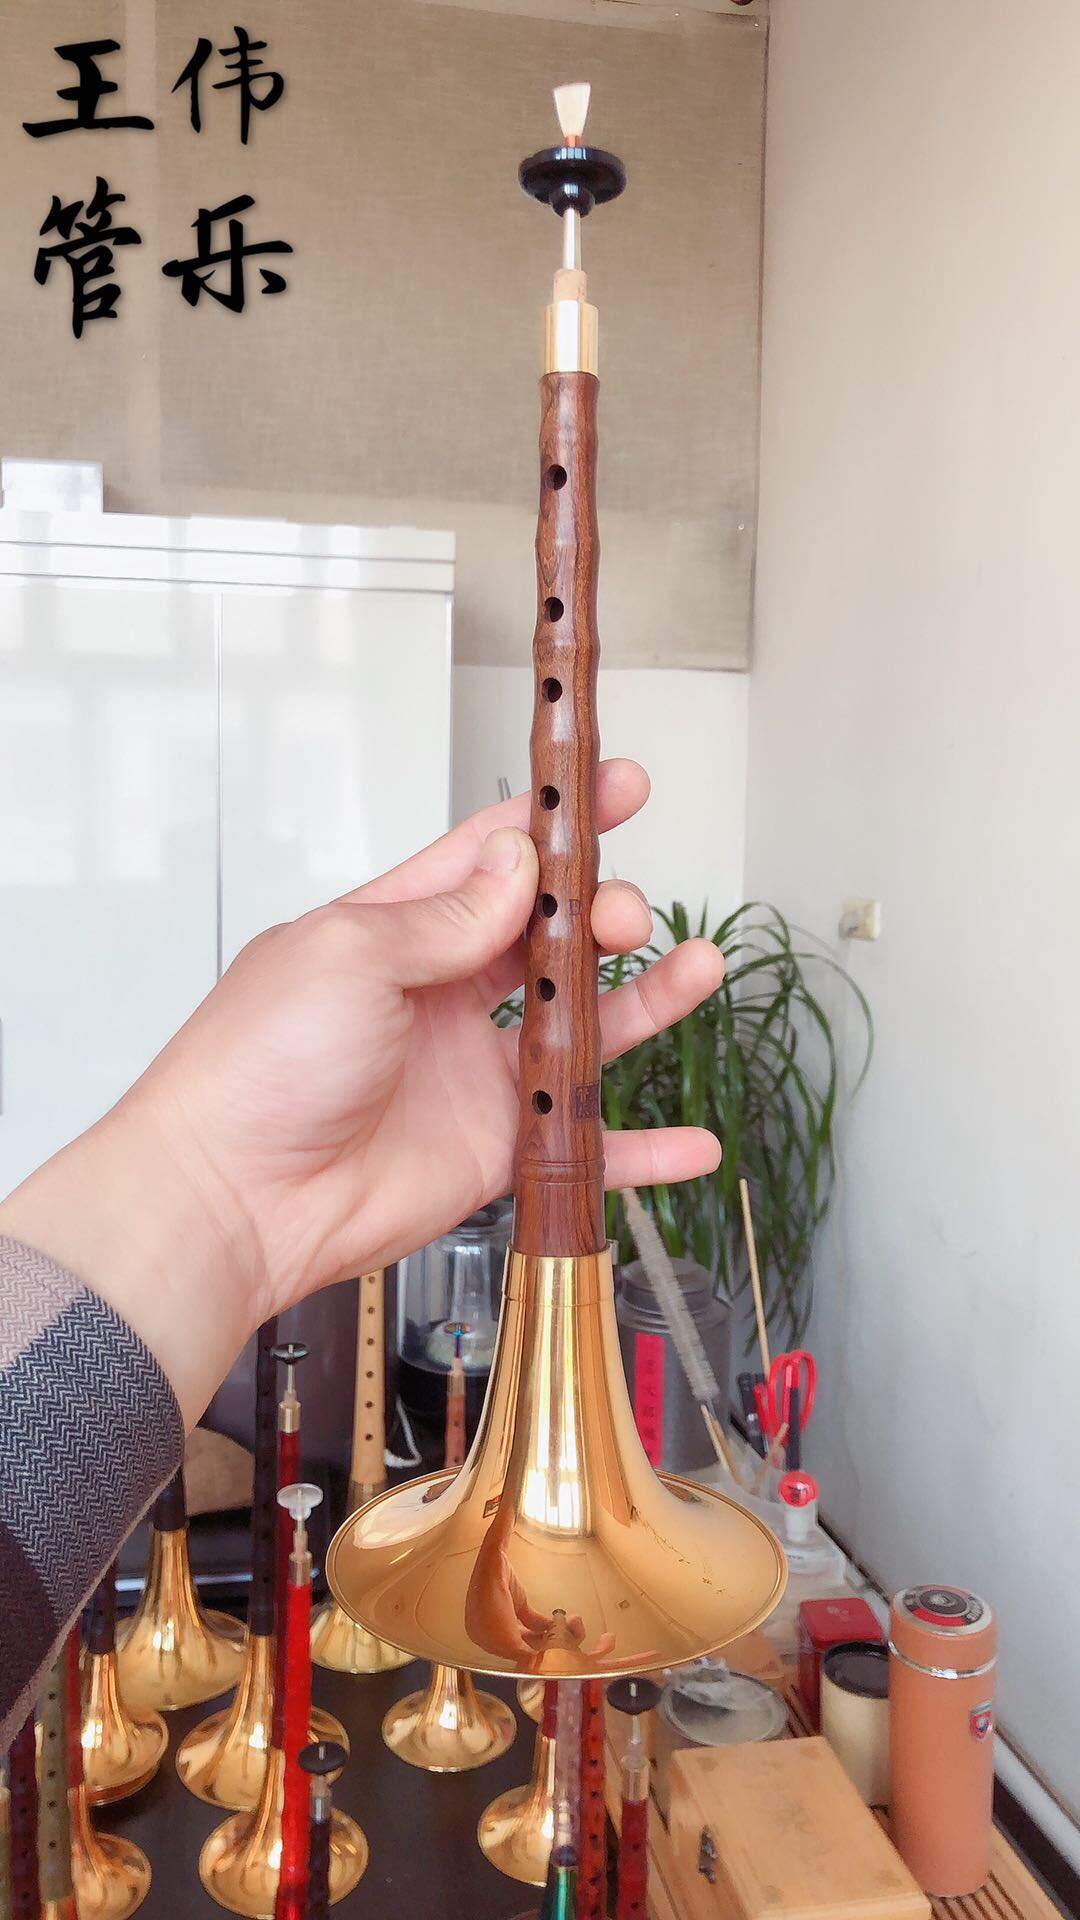 Suona Musical Instrument D Deman Suonad Adult Professional Playing Beginner Adult Suona Size 